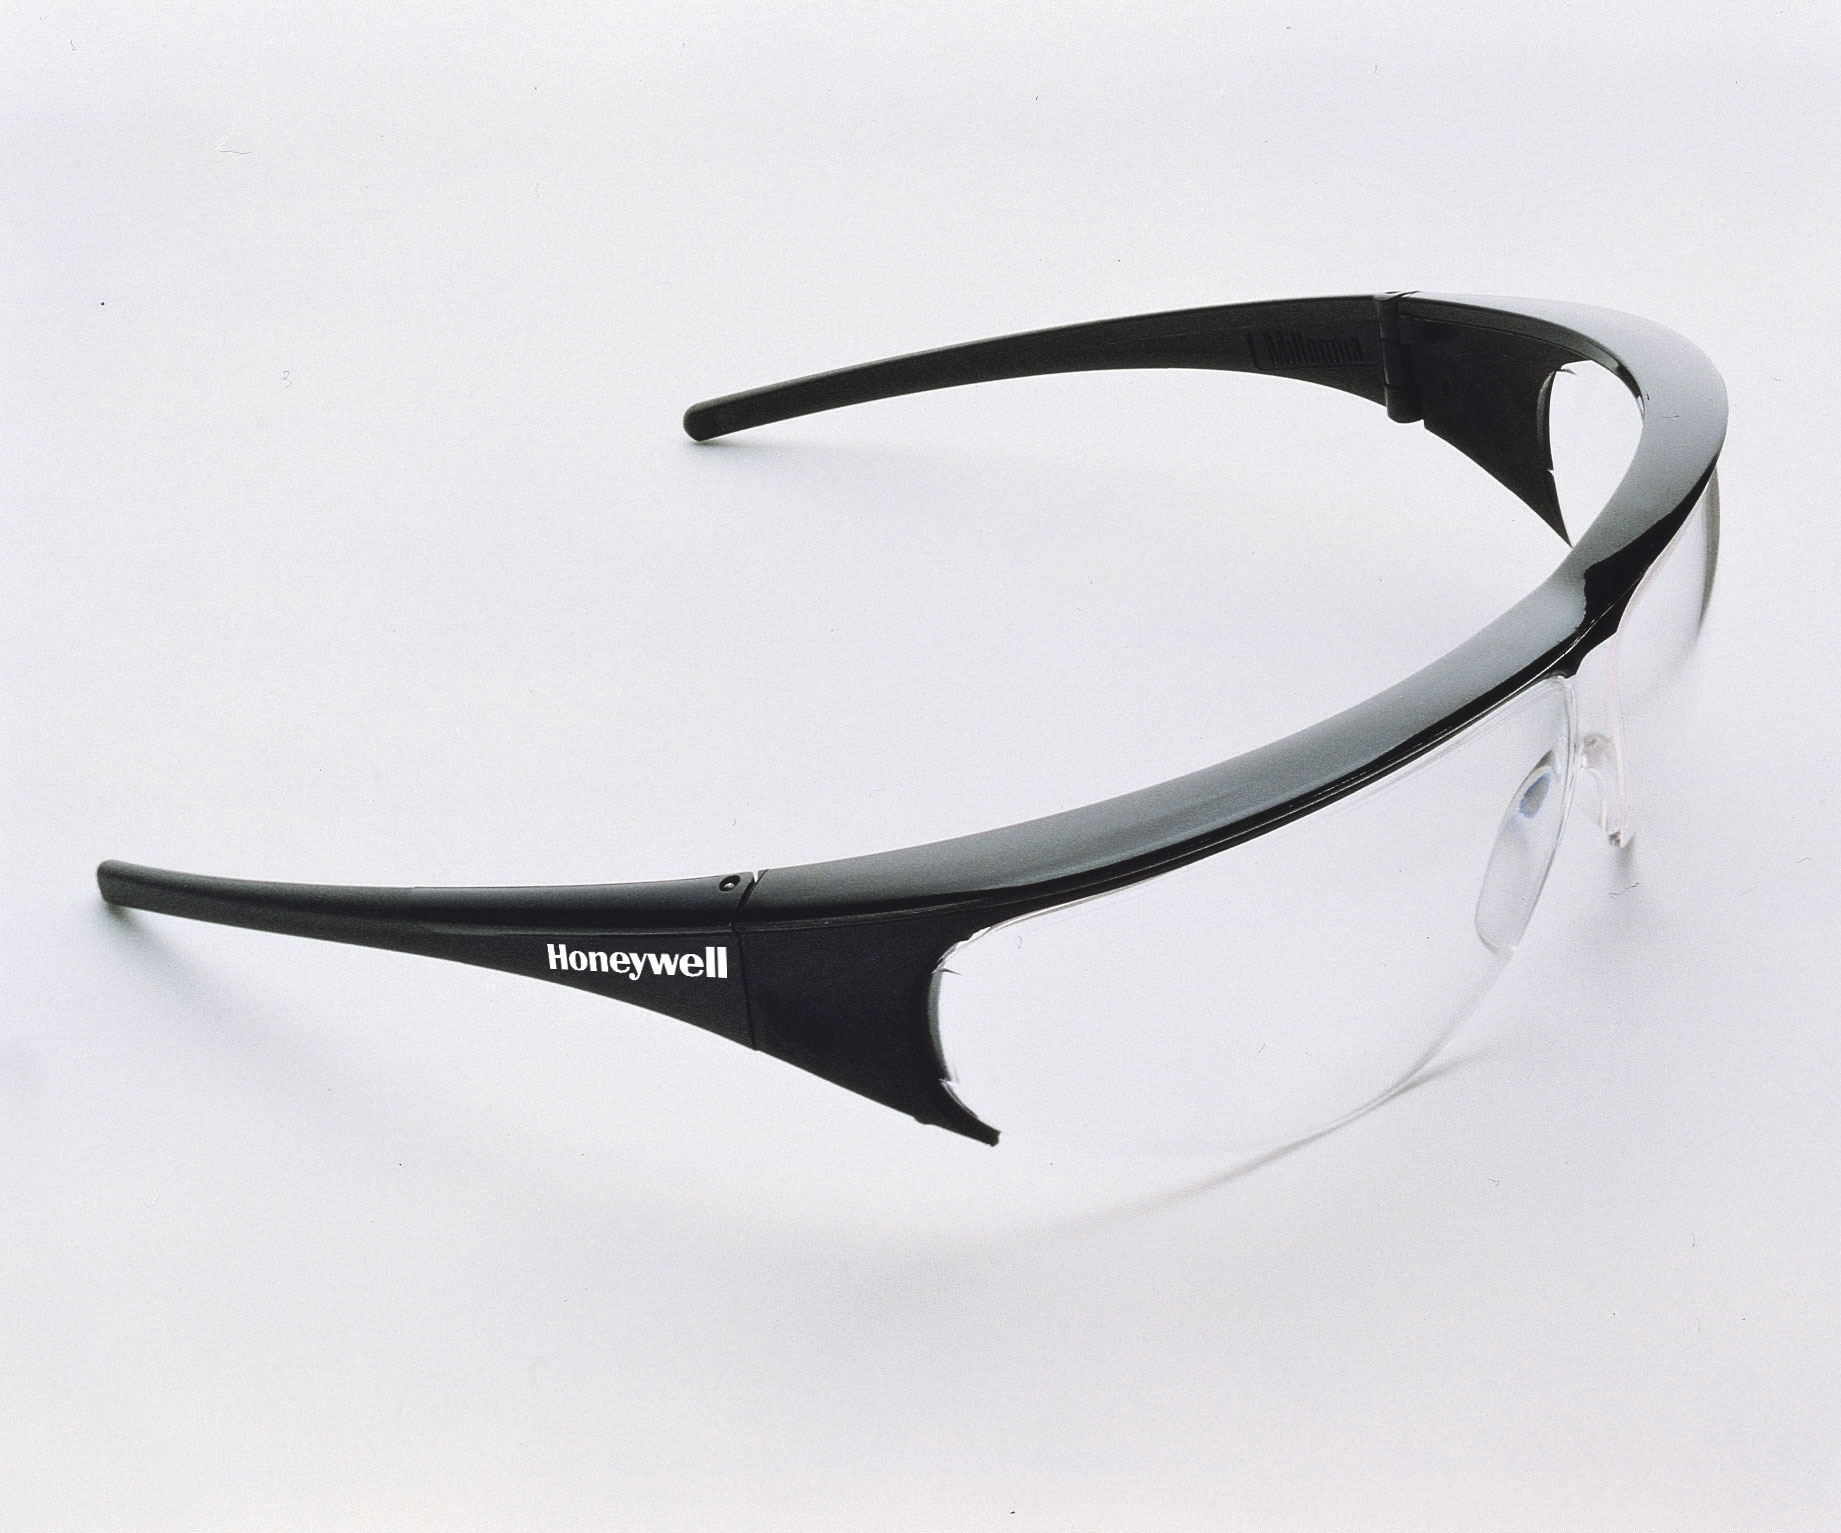 Polysafe™ glasses. HONEYWELL. Model: Polysafe TM -Colourless frame antiscratches. Lens: Colourless (Polysafe Plus) . Frame: Colourless. Treatment: Anti-scratch. Lens marks: 2C-1.2 1F